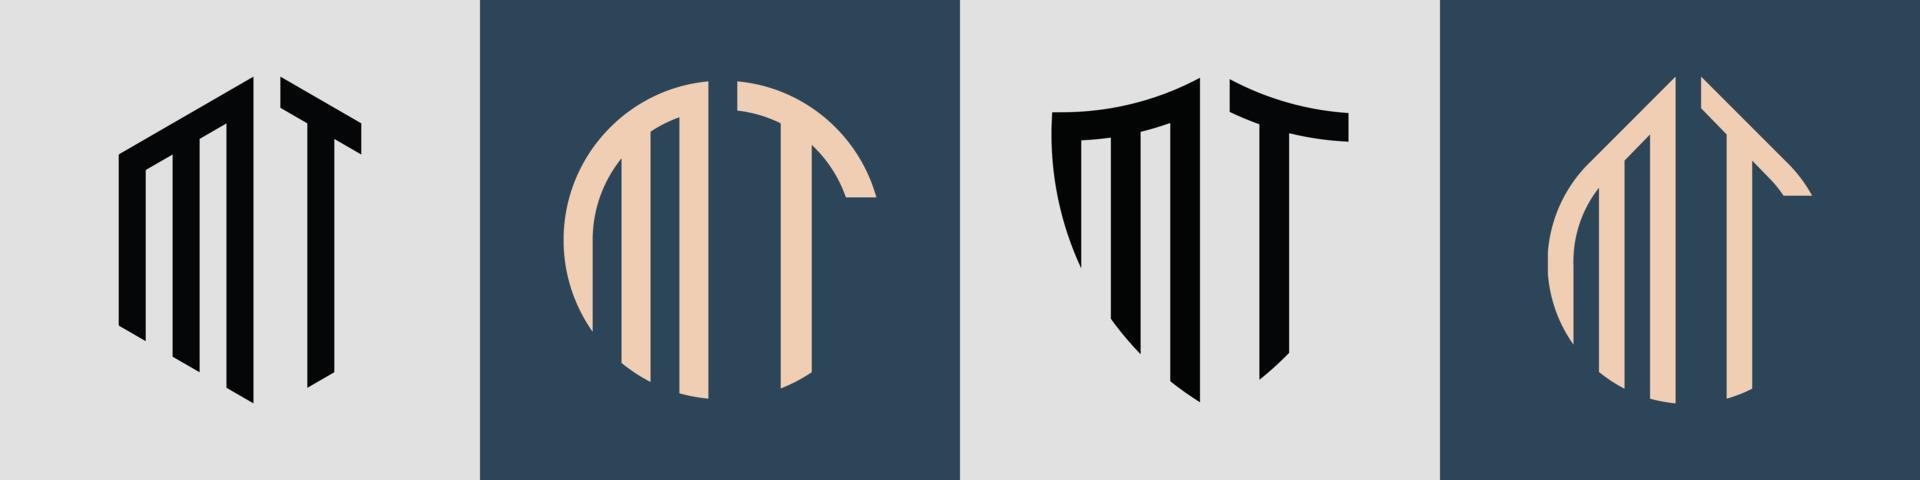 Creative simple Initial Letters MT Logo Designs Bundle. vector